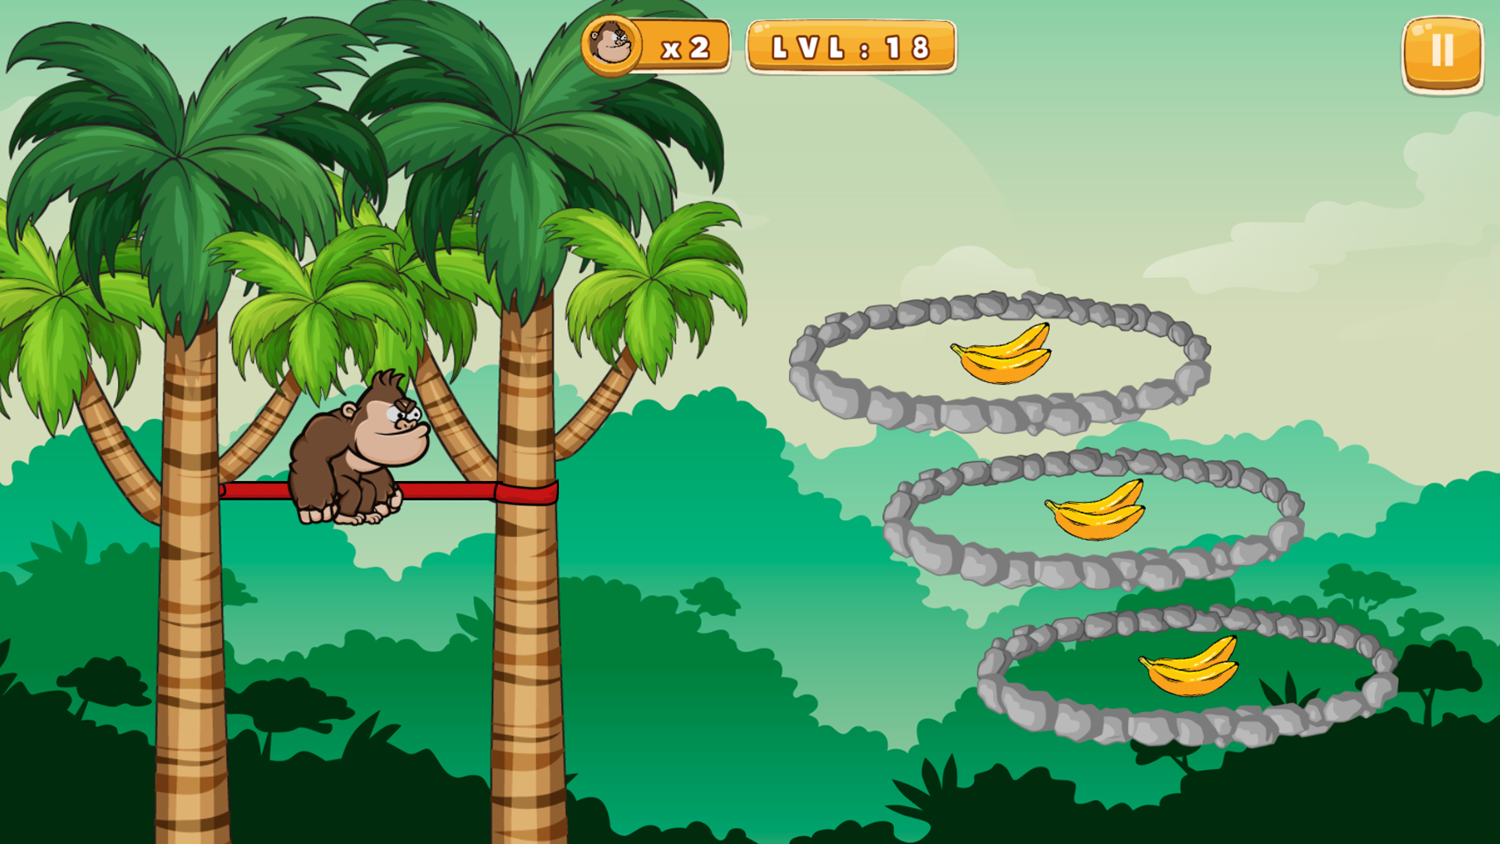 Monkey King Game Level Progress Screenshot.